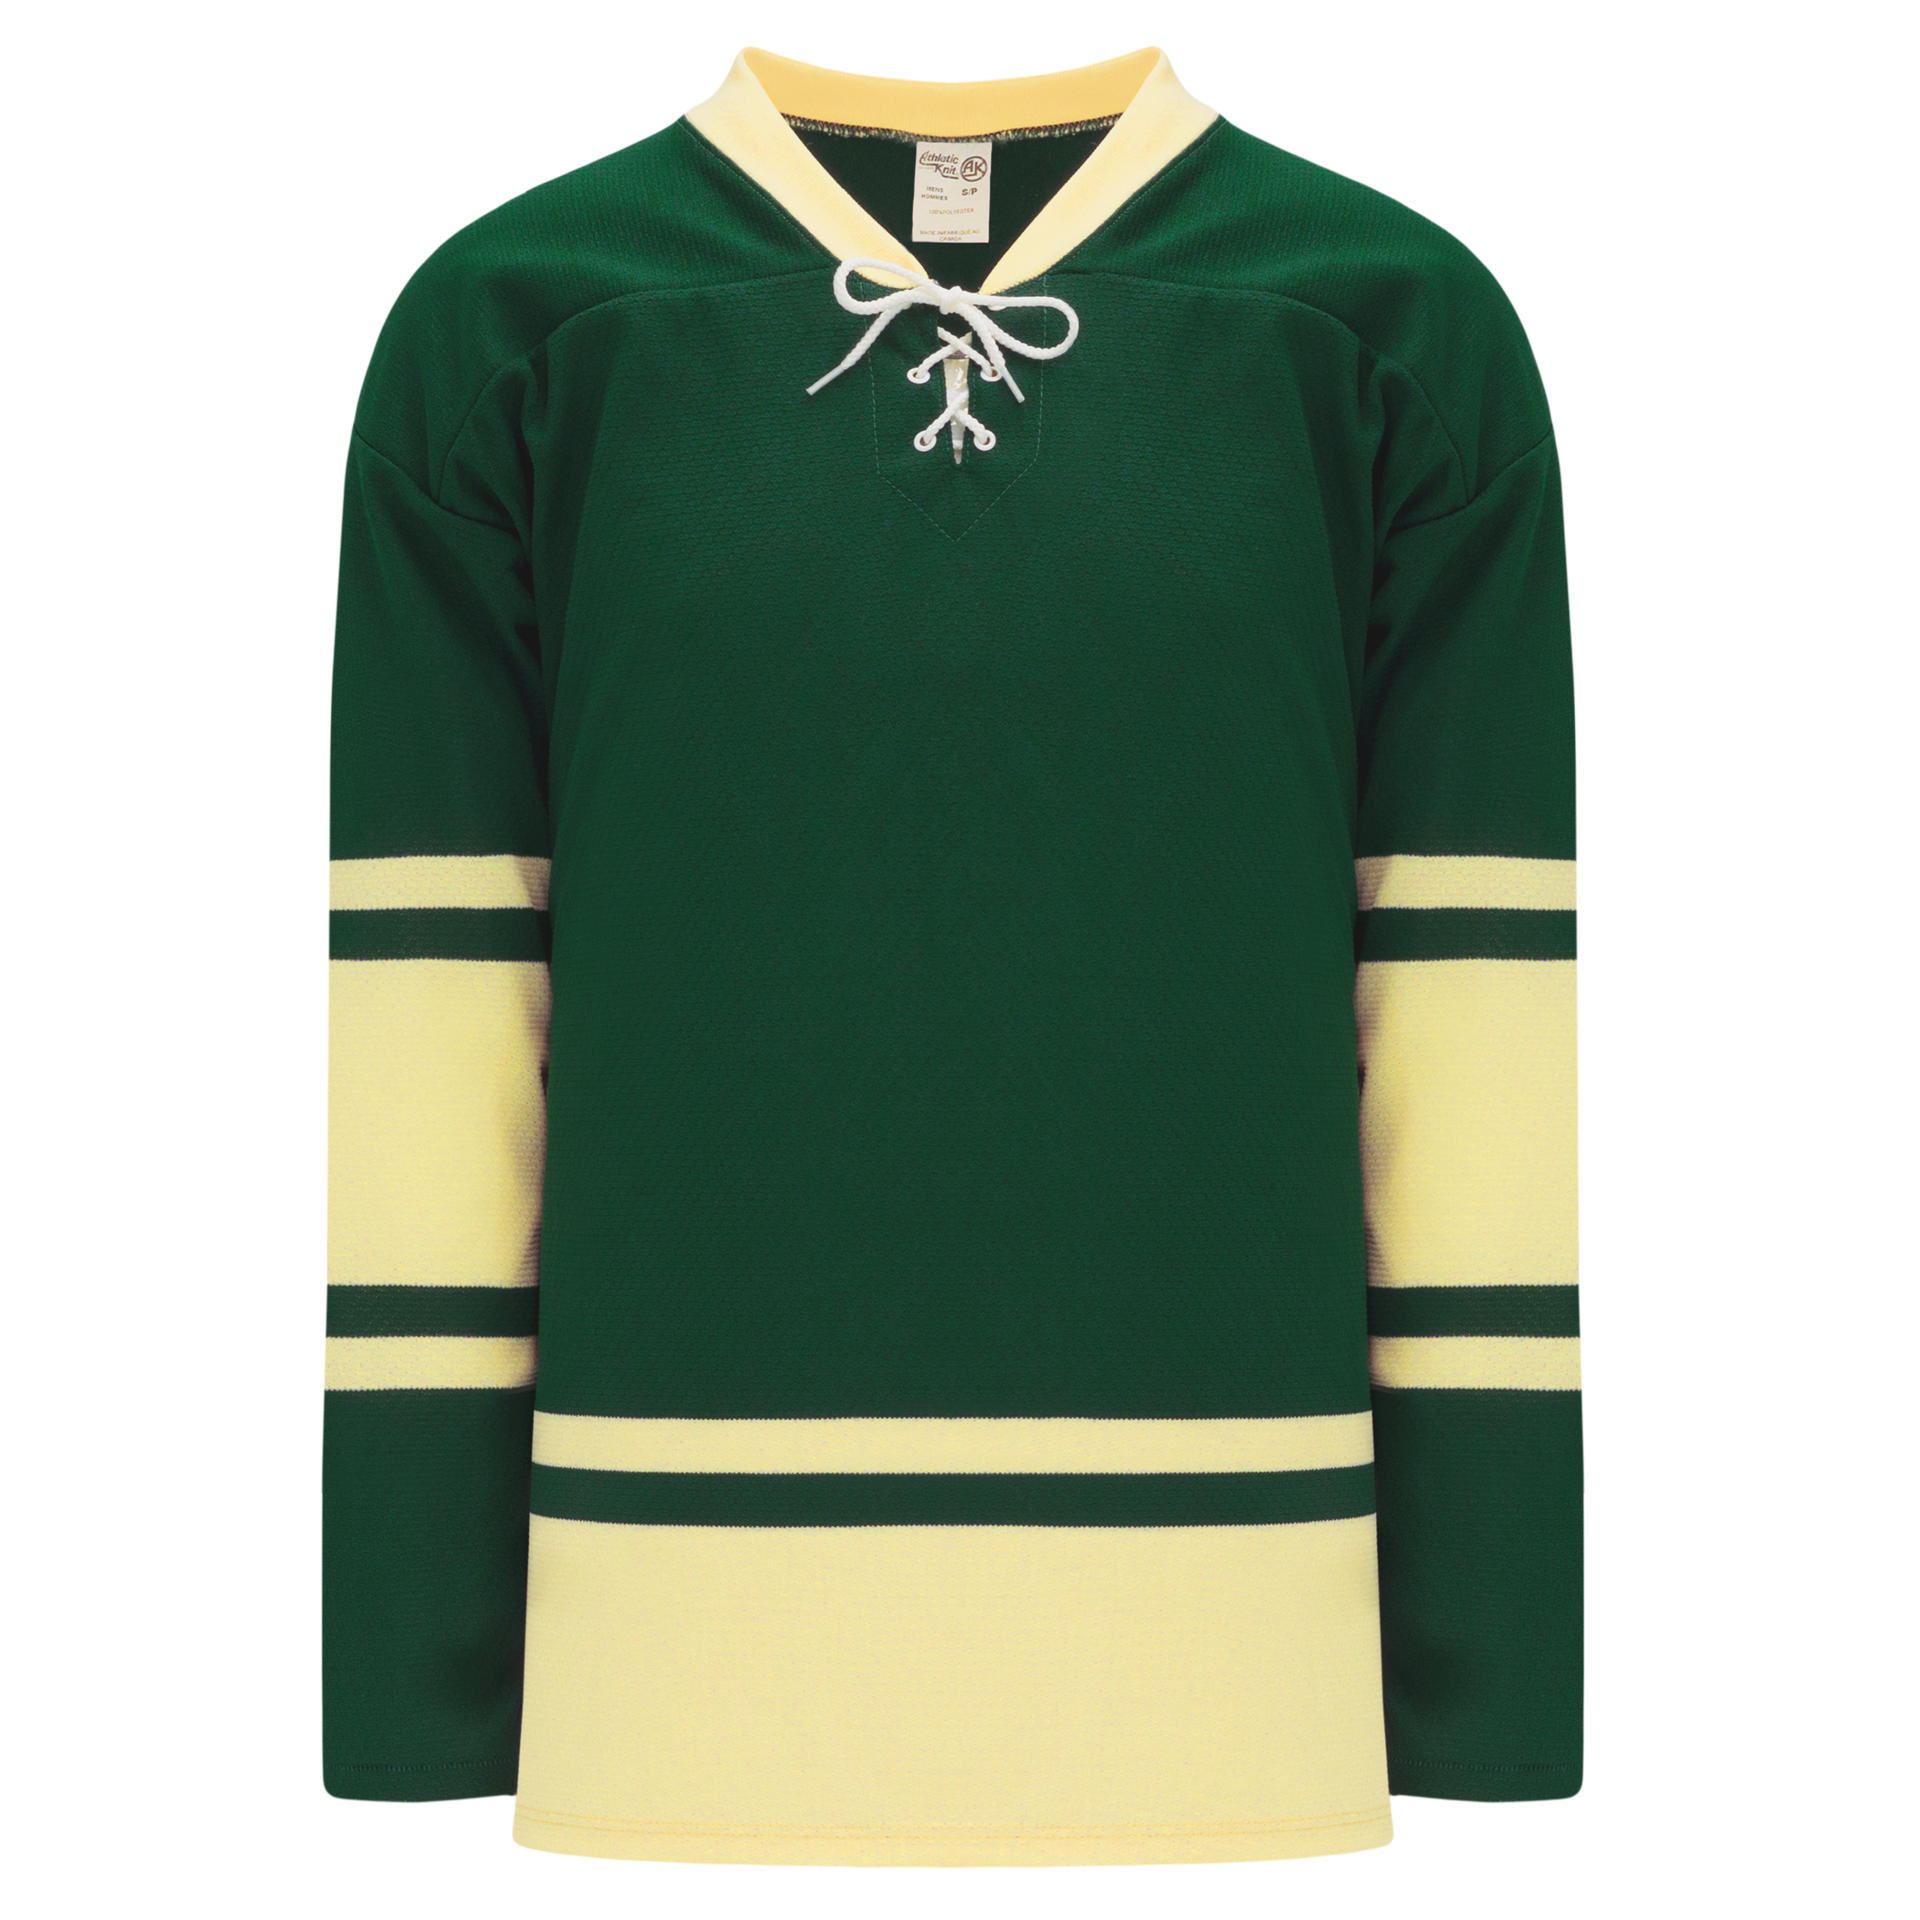 Athletic Knit Pro Series Mighty Ducks Green Jersey | Hockey | NHL | Jerseys 2XL